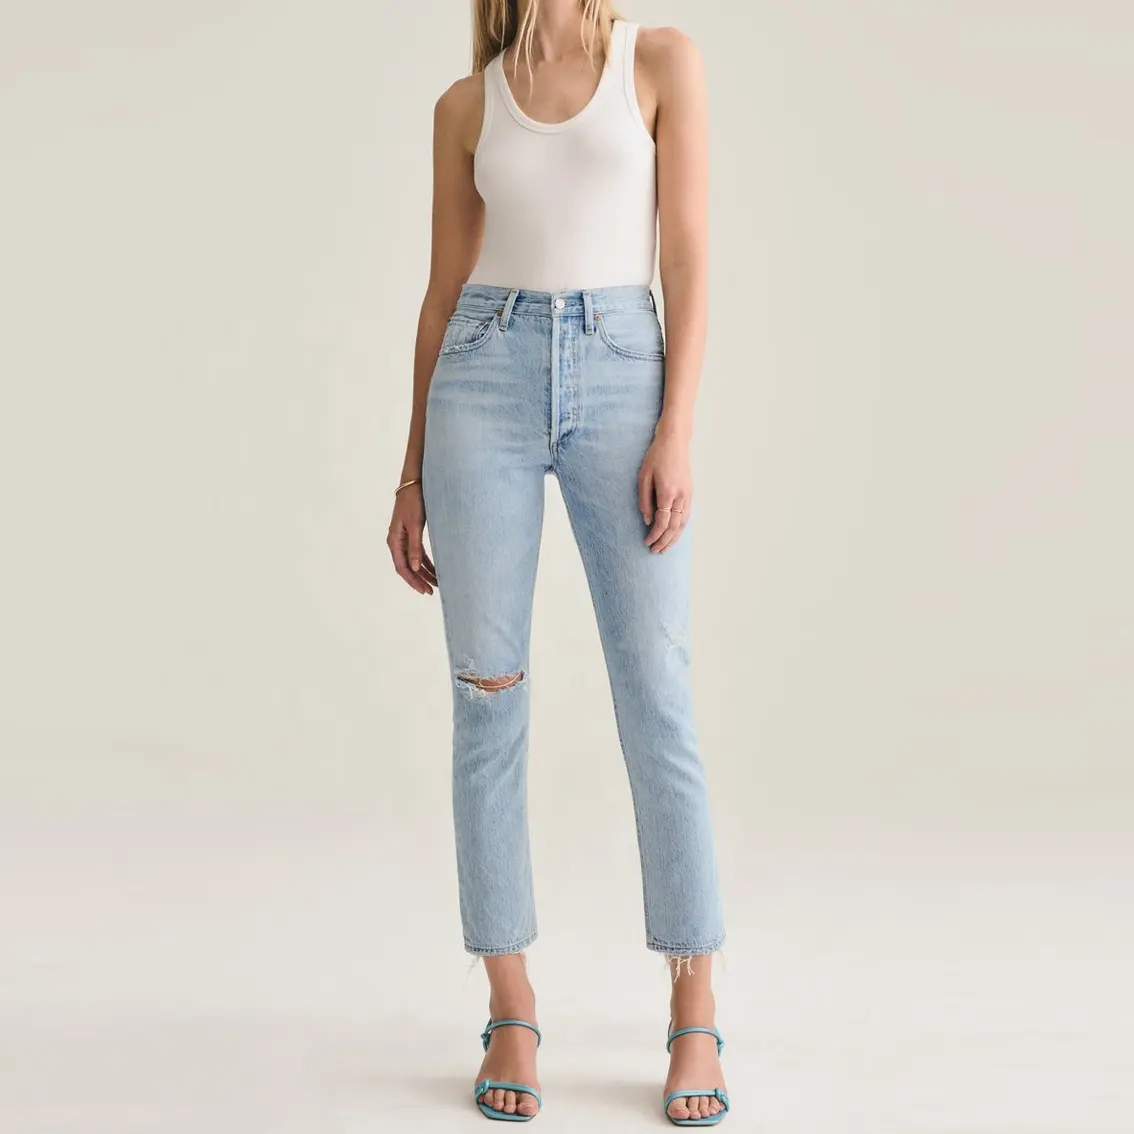 Wholesale high quality slim skinny women ripped jeans slim fit raw hem denim trousers